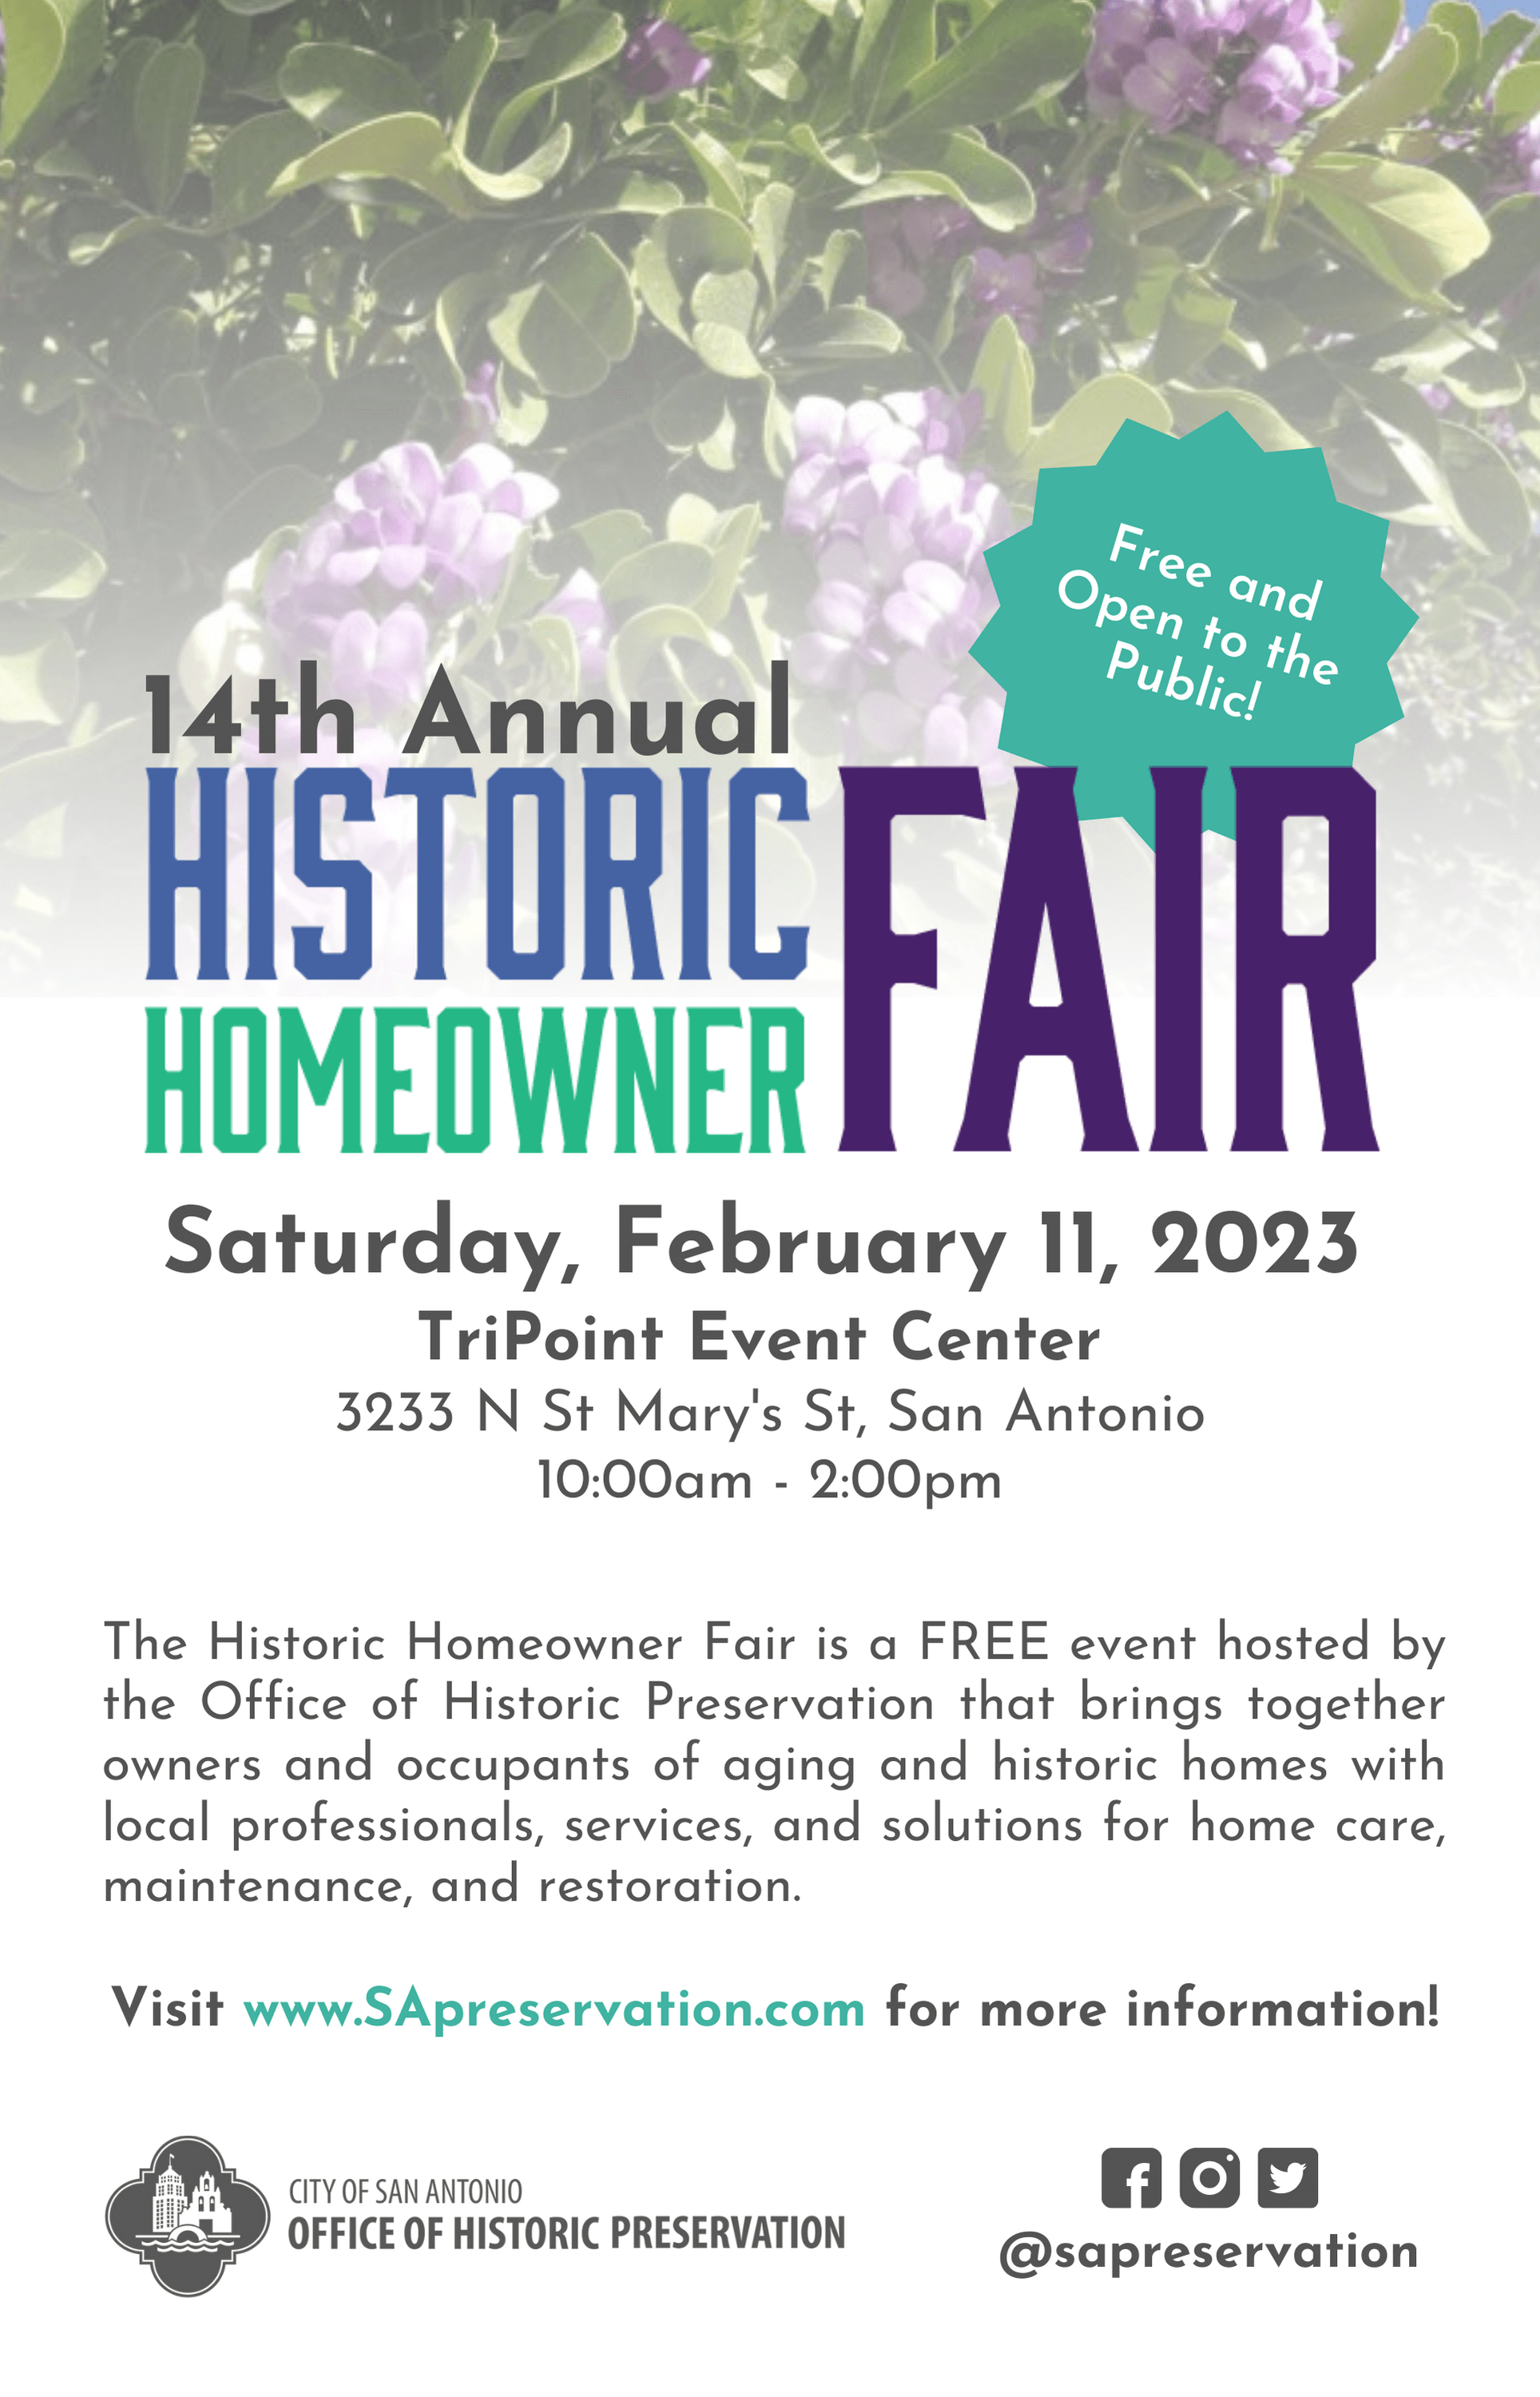 Historic Homeowner Fair Feb 11, 2023 Banner